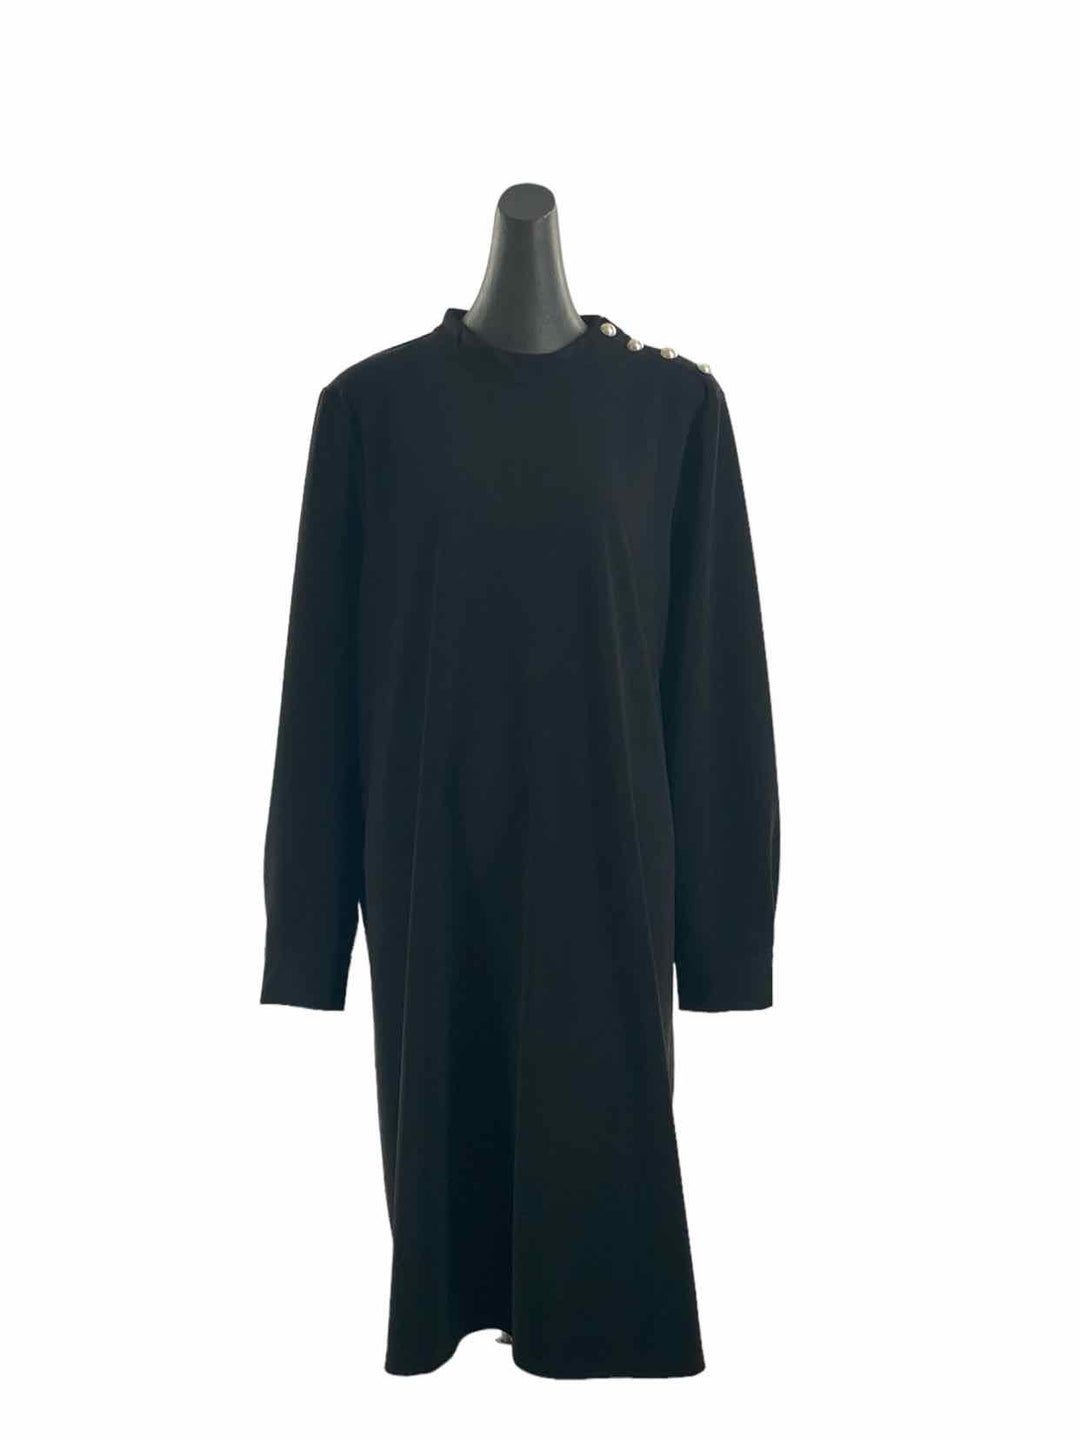 Eloquii Size 22 Black Dress